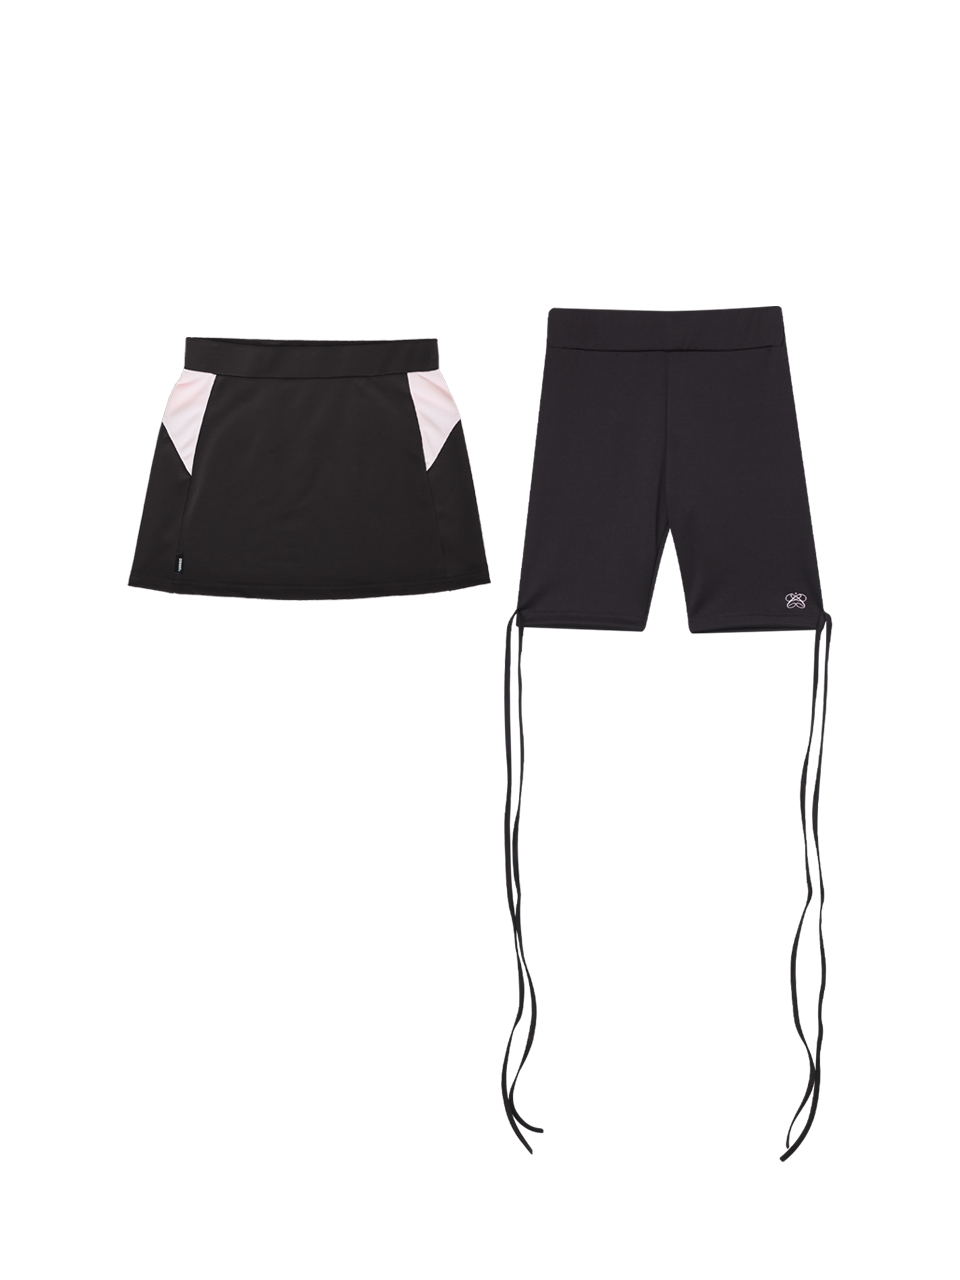 Biker Shorts Skirt Set - Charcoal